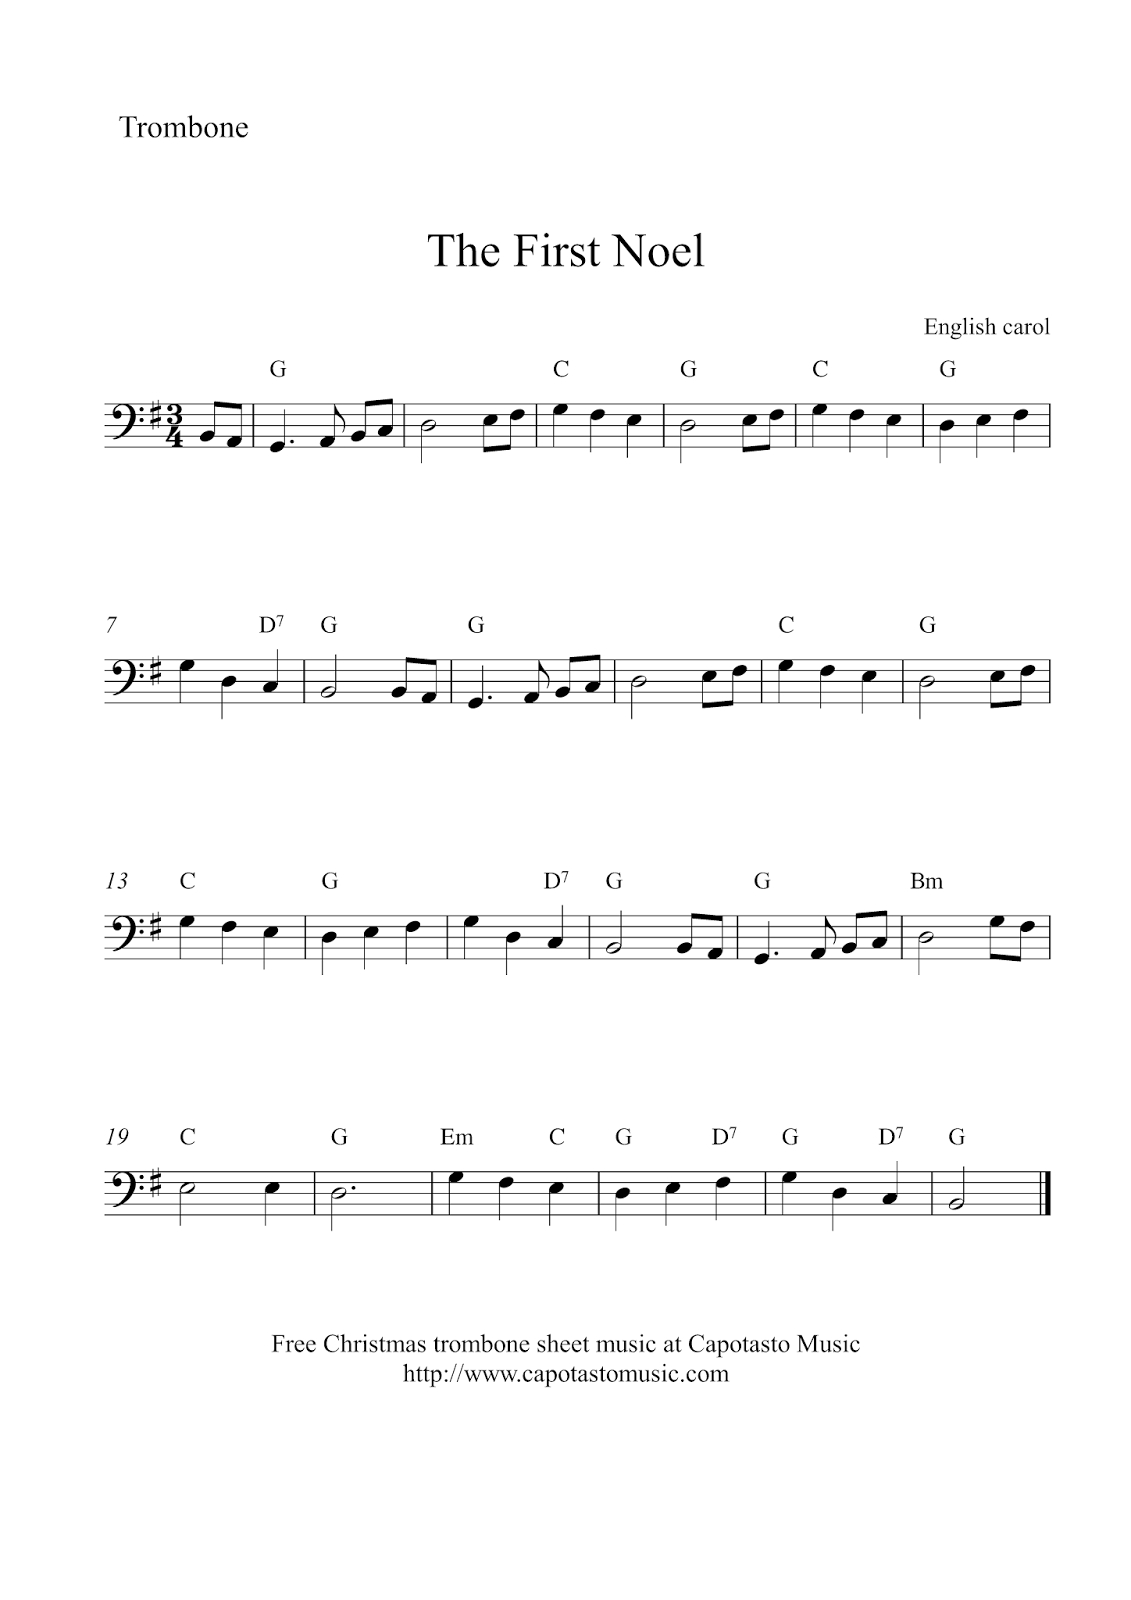 Free Christmas Trombone Sheet Music - The First Noel - Trombone Christmas Sheet Music Free Printable